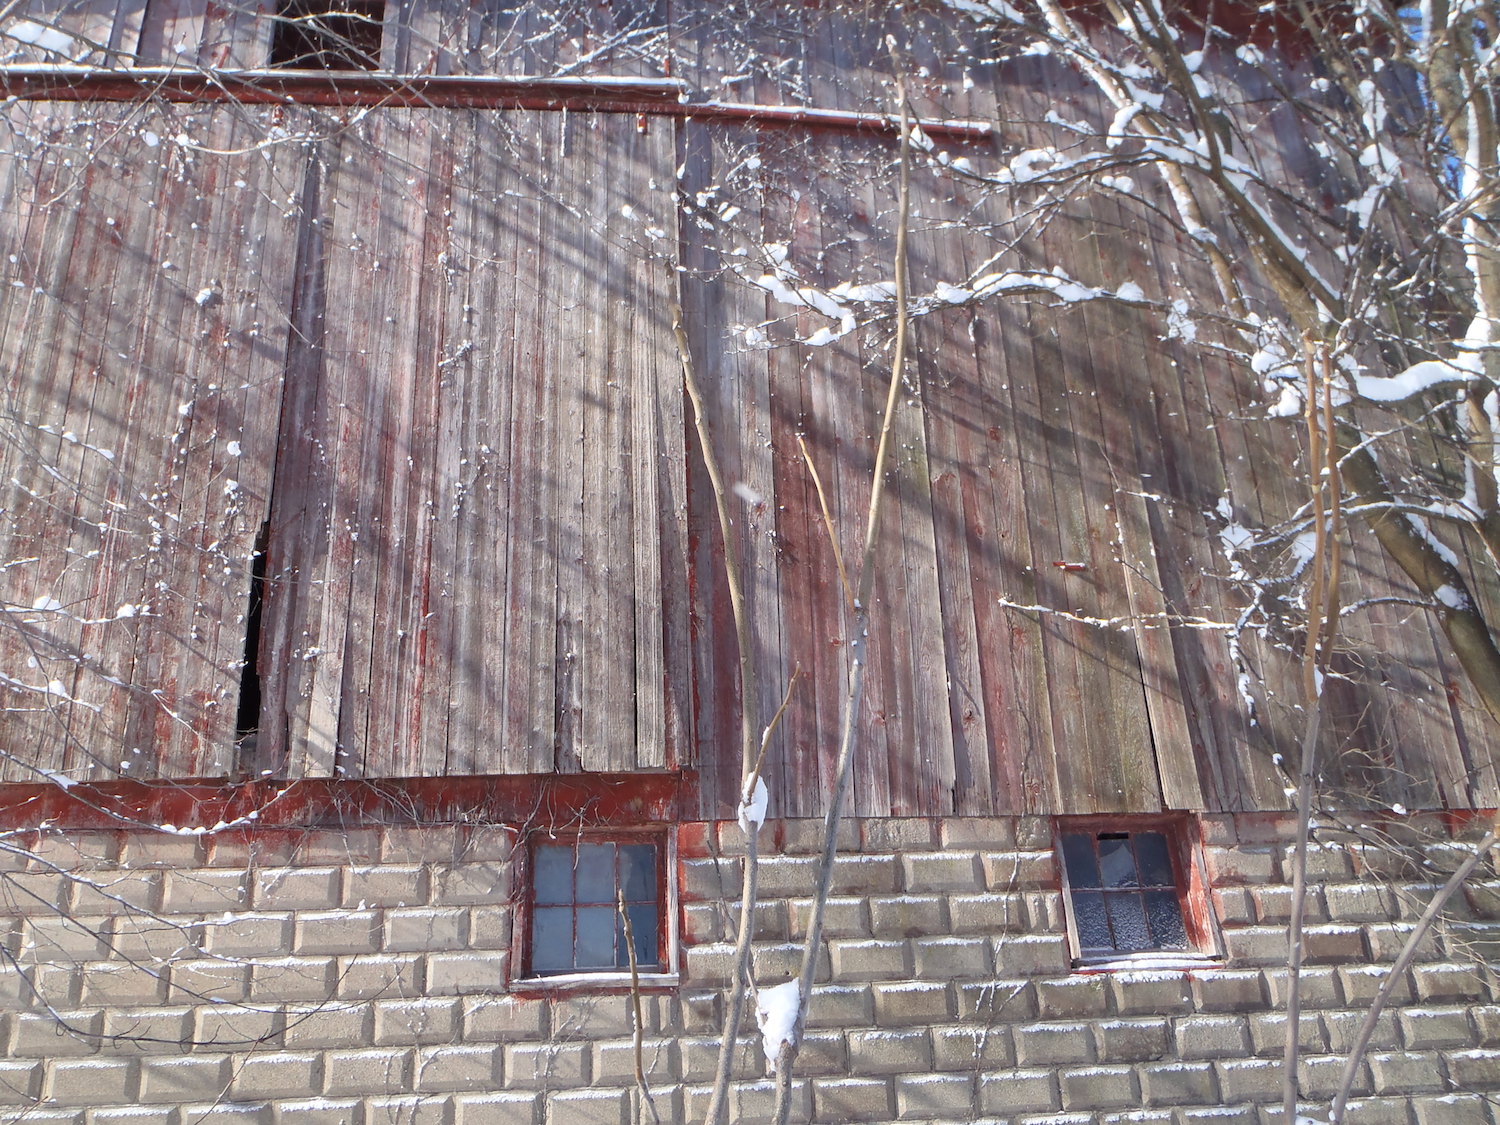 The side of a barn in Eau Clair, MI